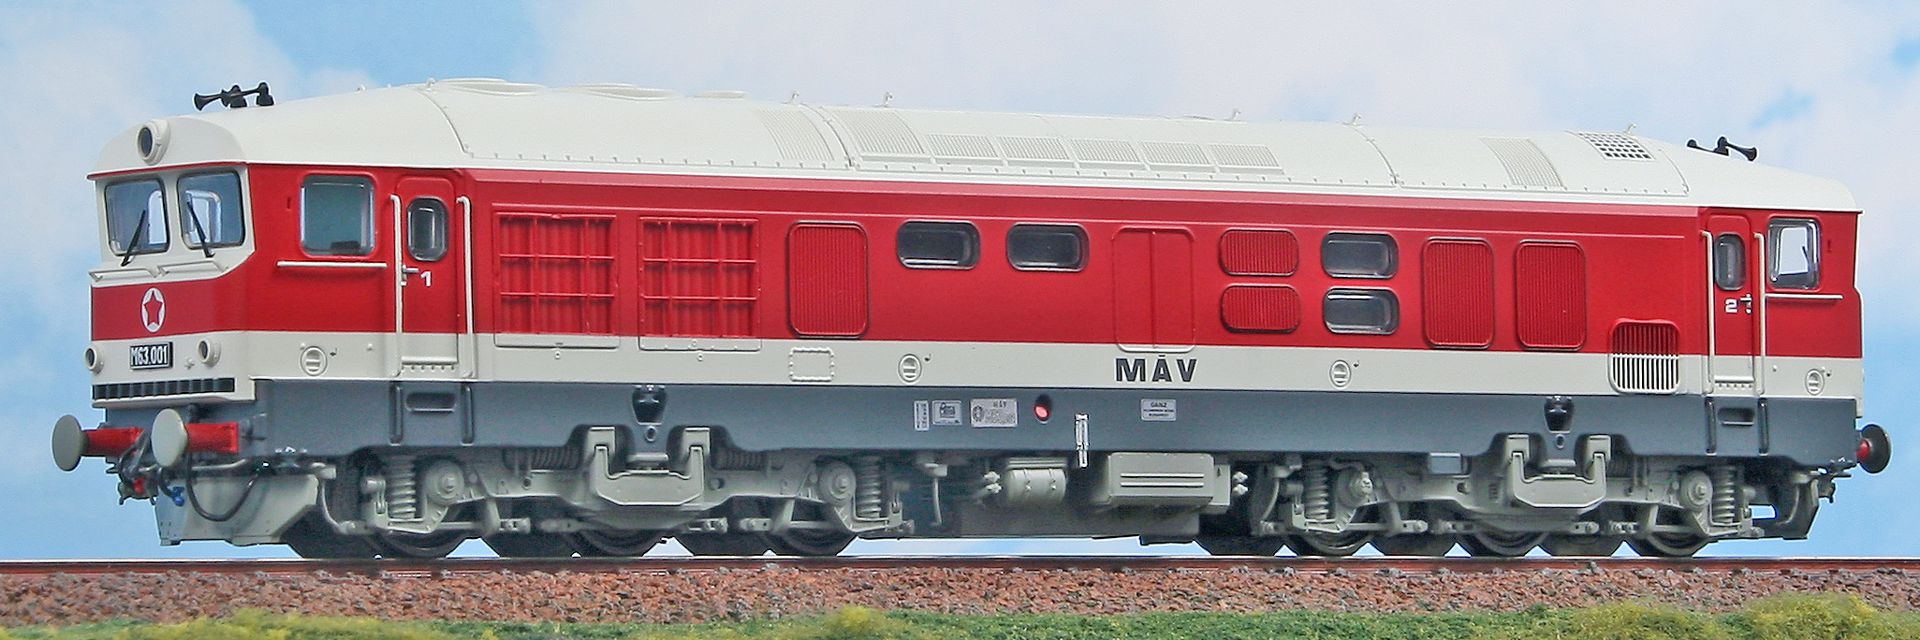 ACME AC 60689 - Diesellok M63 001, MAV, Ep.IV